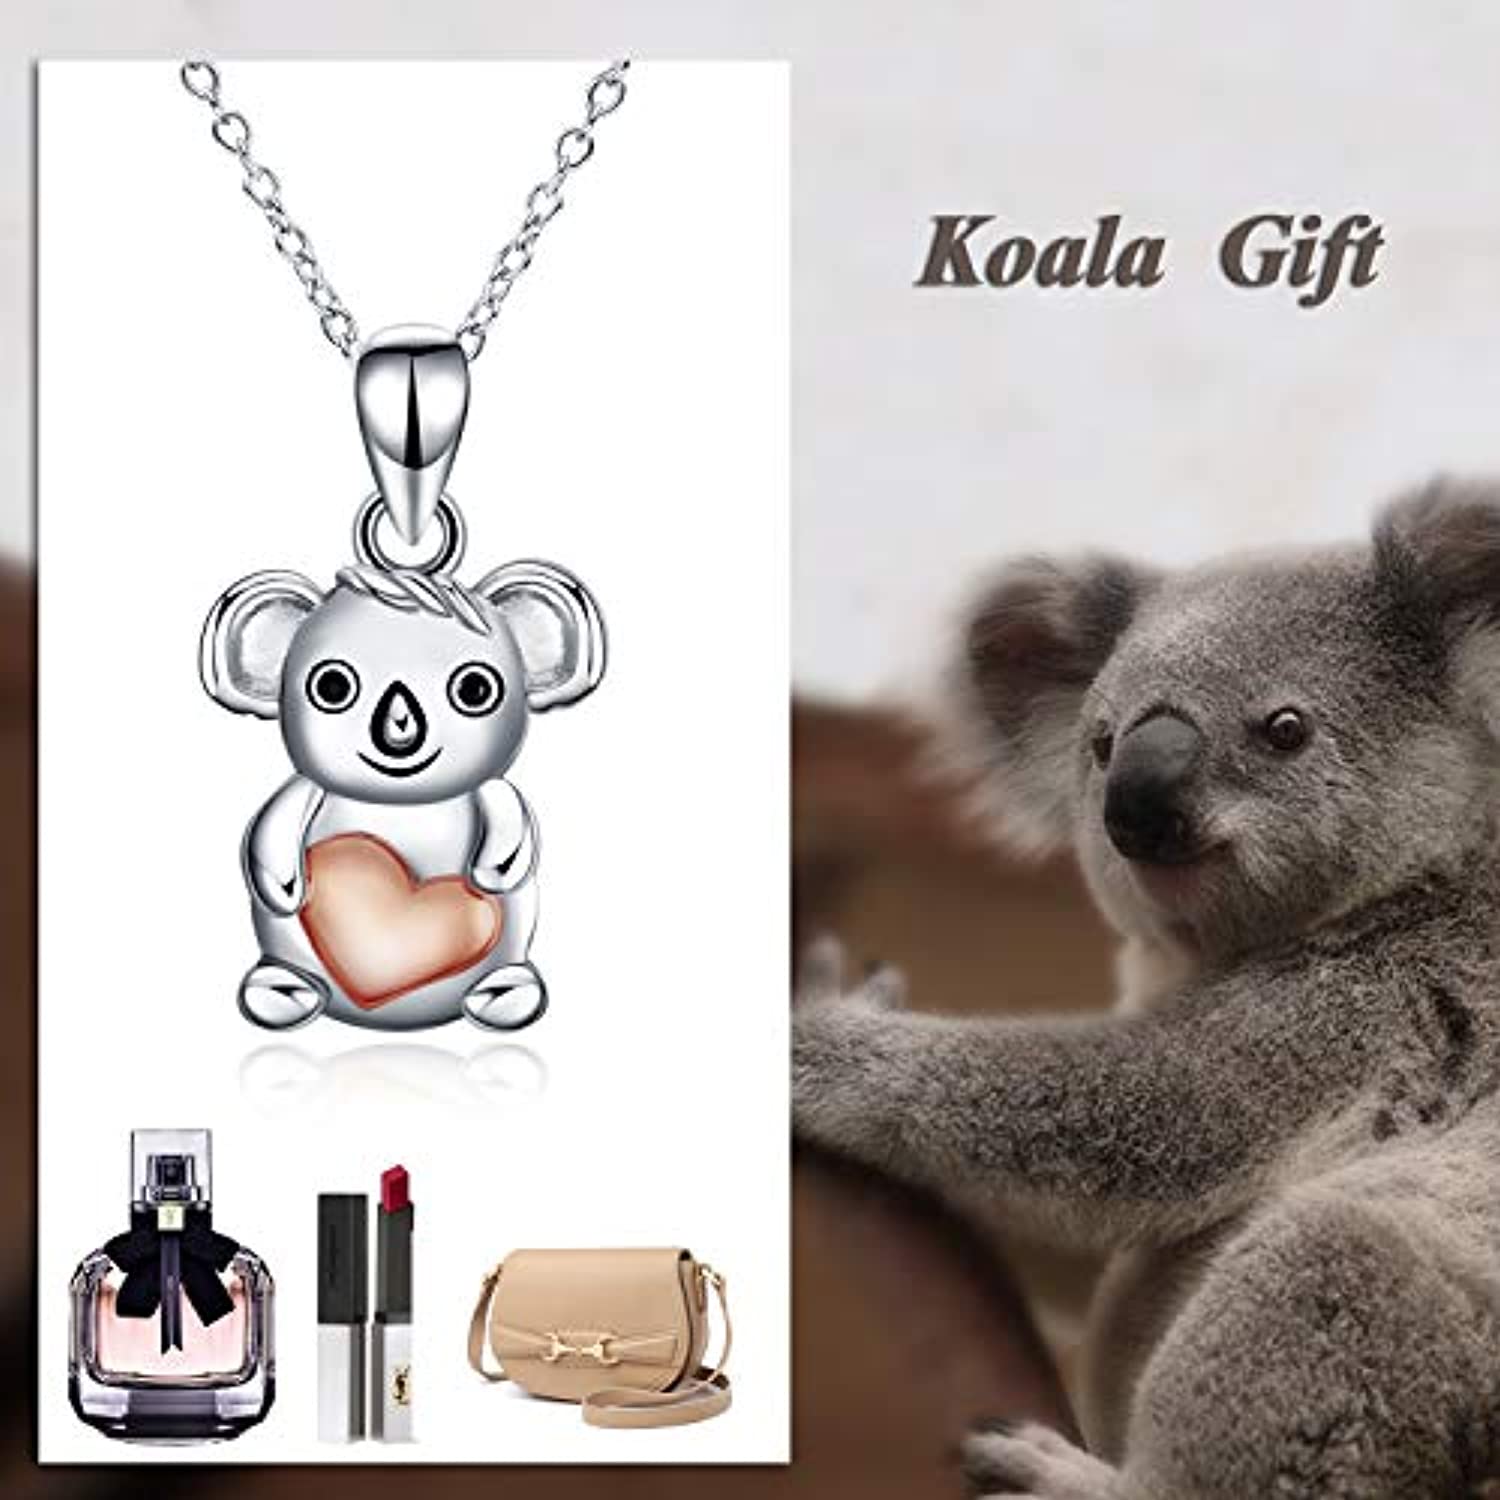 Sterling Silver Cute Koala Rose Gold Heart Pendant Necklace Jewelry Gi